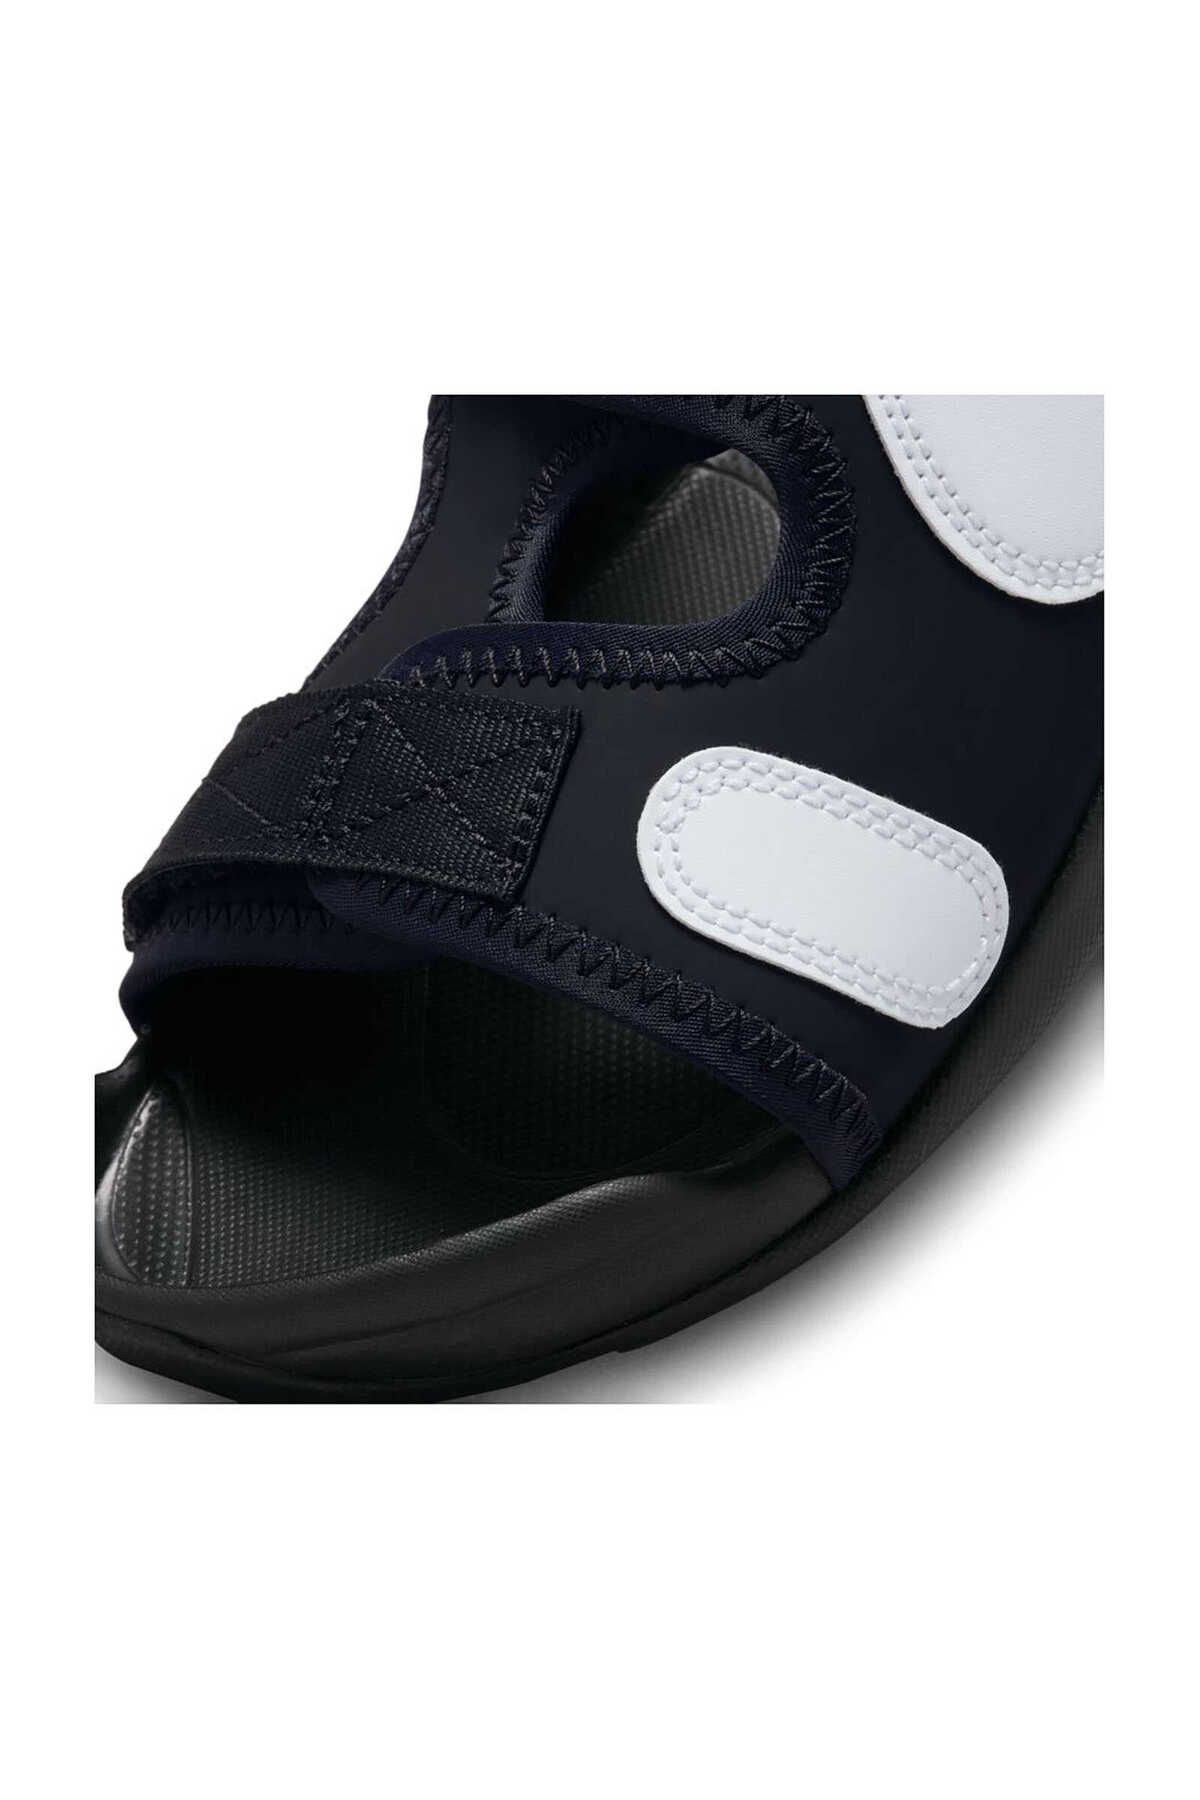 Nike Sunray تنظیم 6 GS Sandals